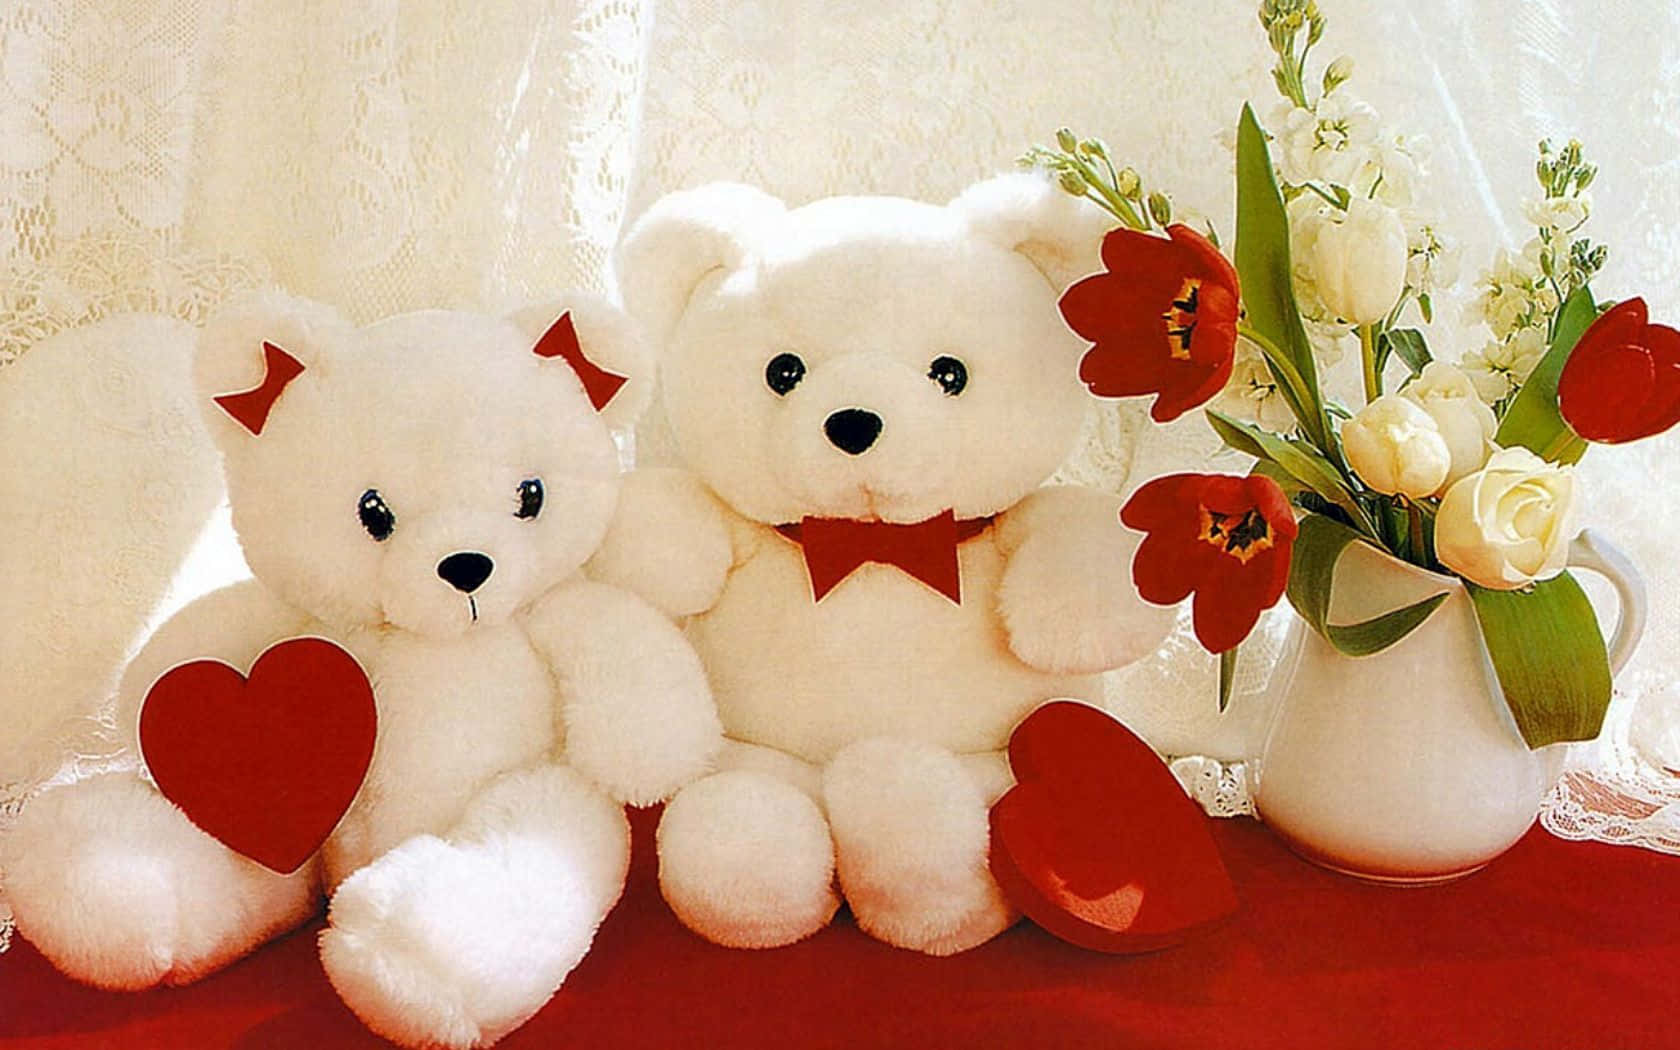 Two White Teddy Bears